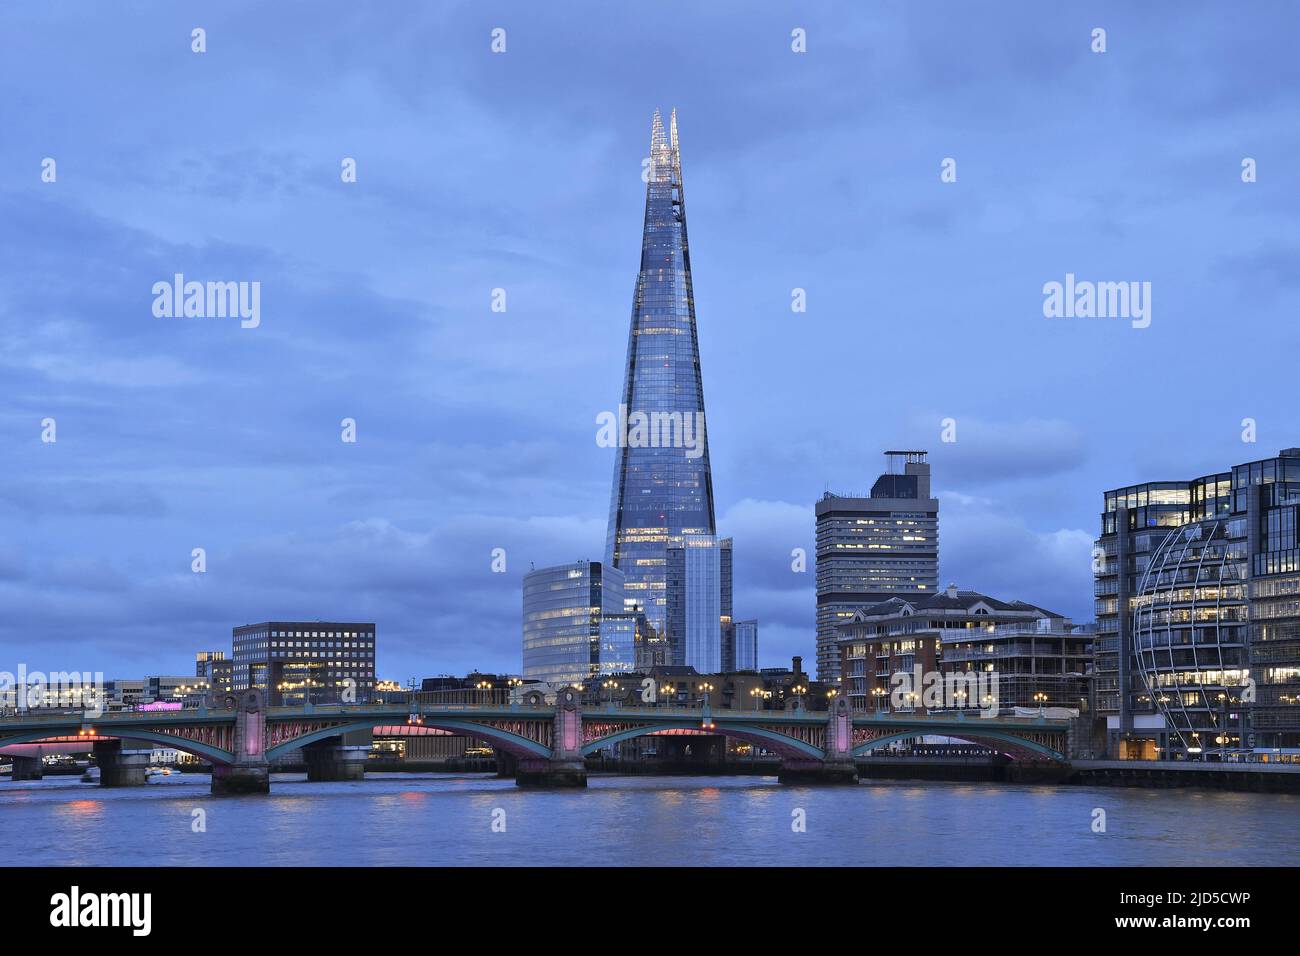 Architettura moderna con grattacielo Shard of Glass al tramonto, South Bank London UK. Foto Stock